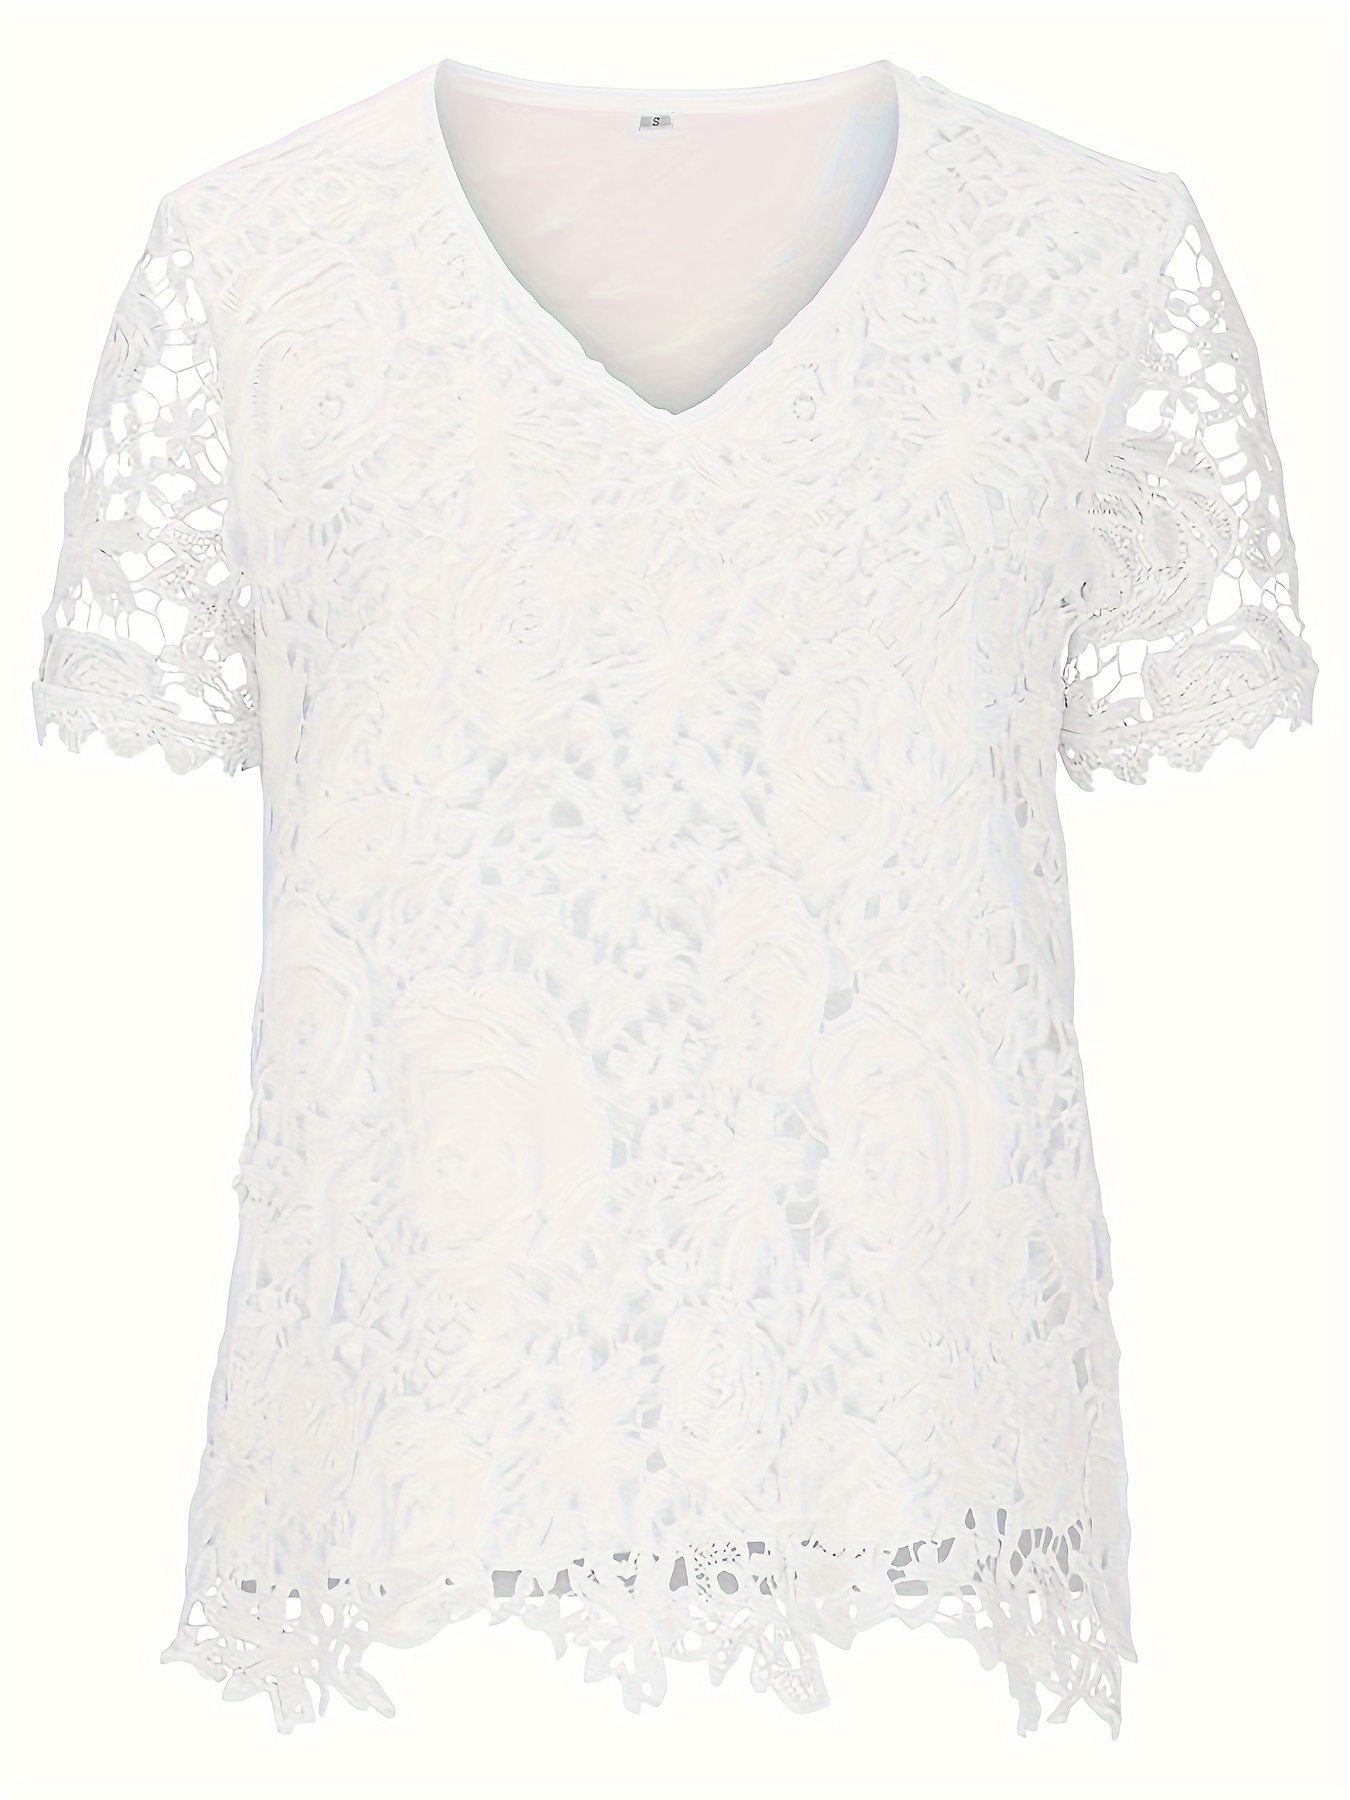 White Short Sleeve Scoop Neckline Lace Detailing Top